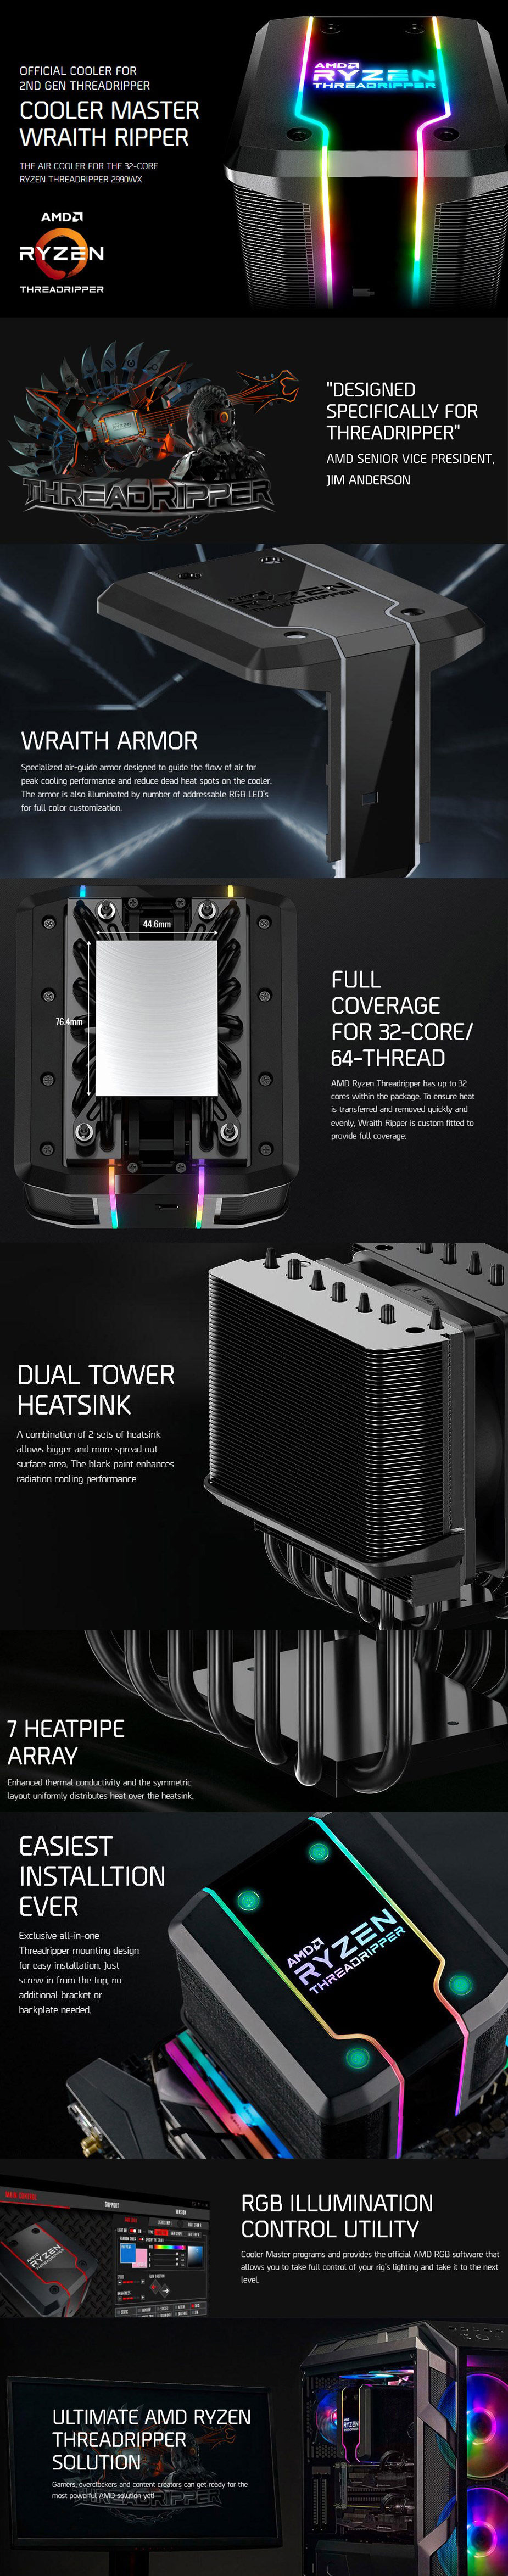 Cooler Master Wraith Ripper RGB CPU Cooler for AMD Socket TR4 MAM-D7PN-DWRPS-T1 Details